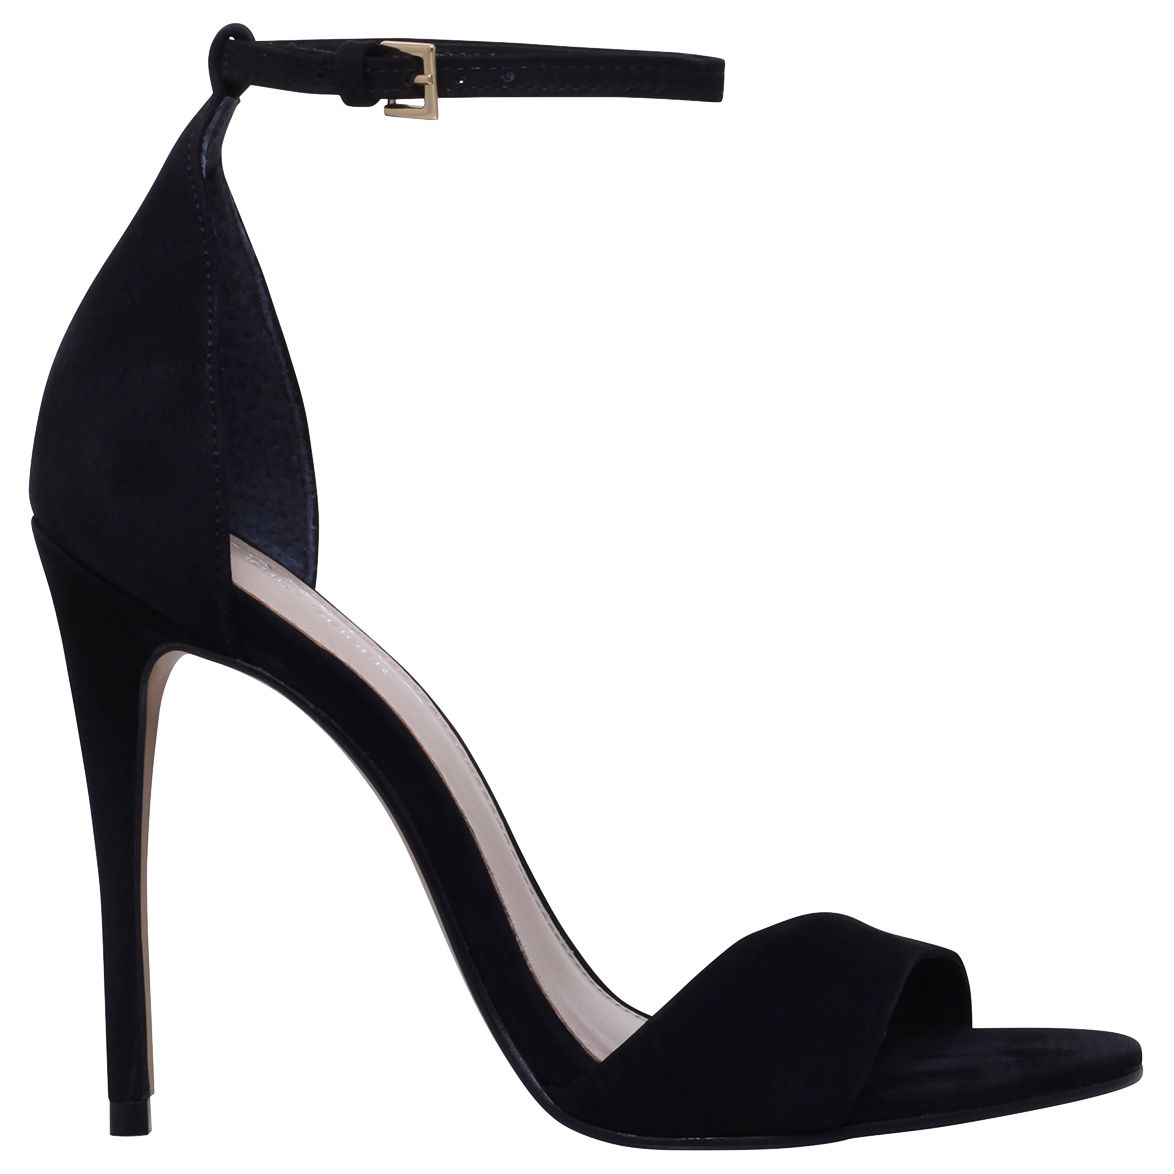 Carvela Glimmer High Heel Sandals, Black Nubuck, 6